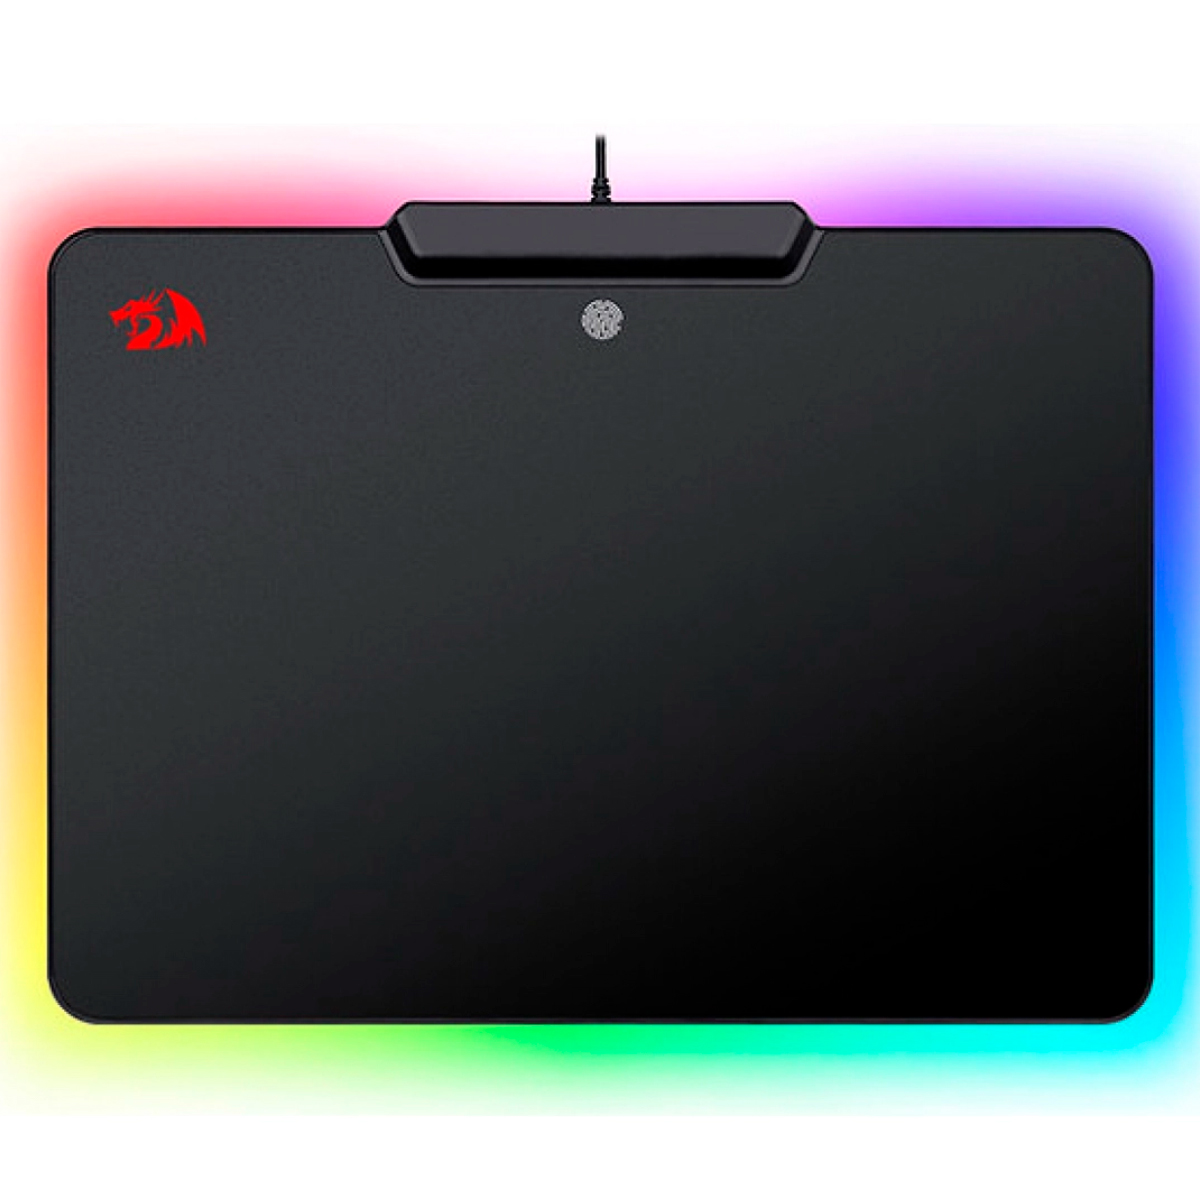 Mousepad Gamer Redragon Epeius - 350 x 250 x 3,6mm - Iluminação RGB - USB - P009